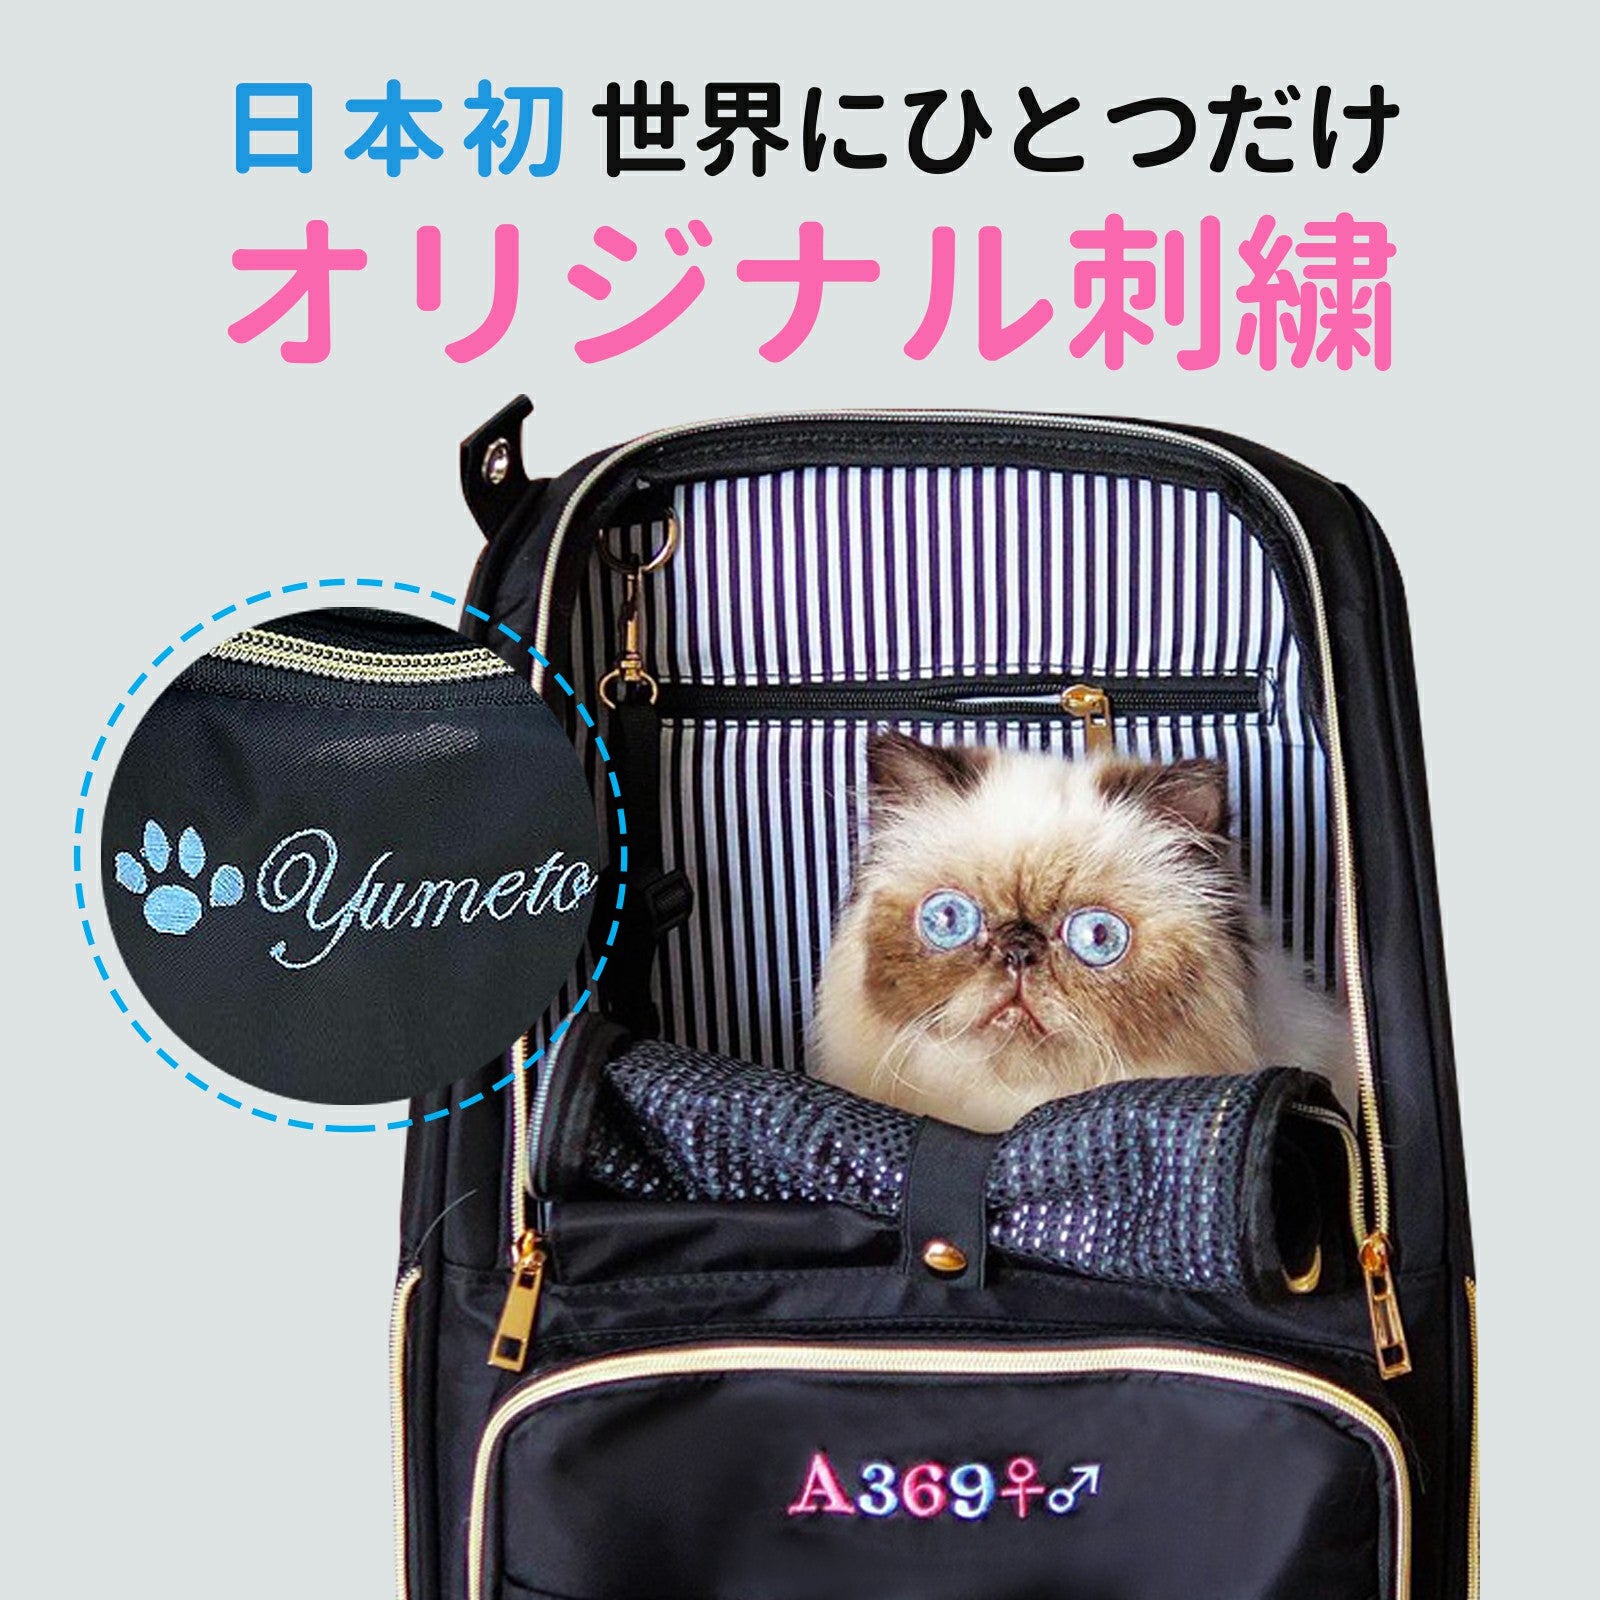 Winsun Japan』日本初 ペットの名前刺繍入りキャリーバッグ専門店